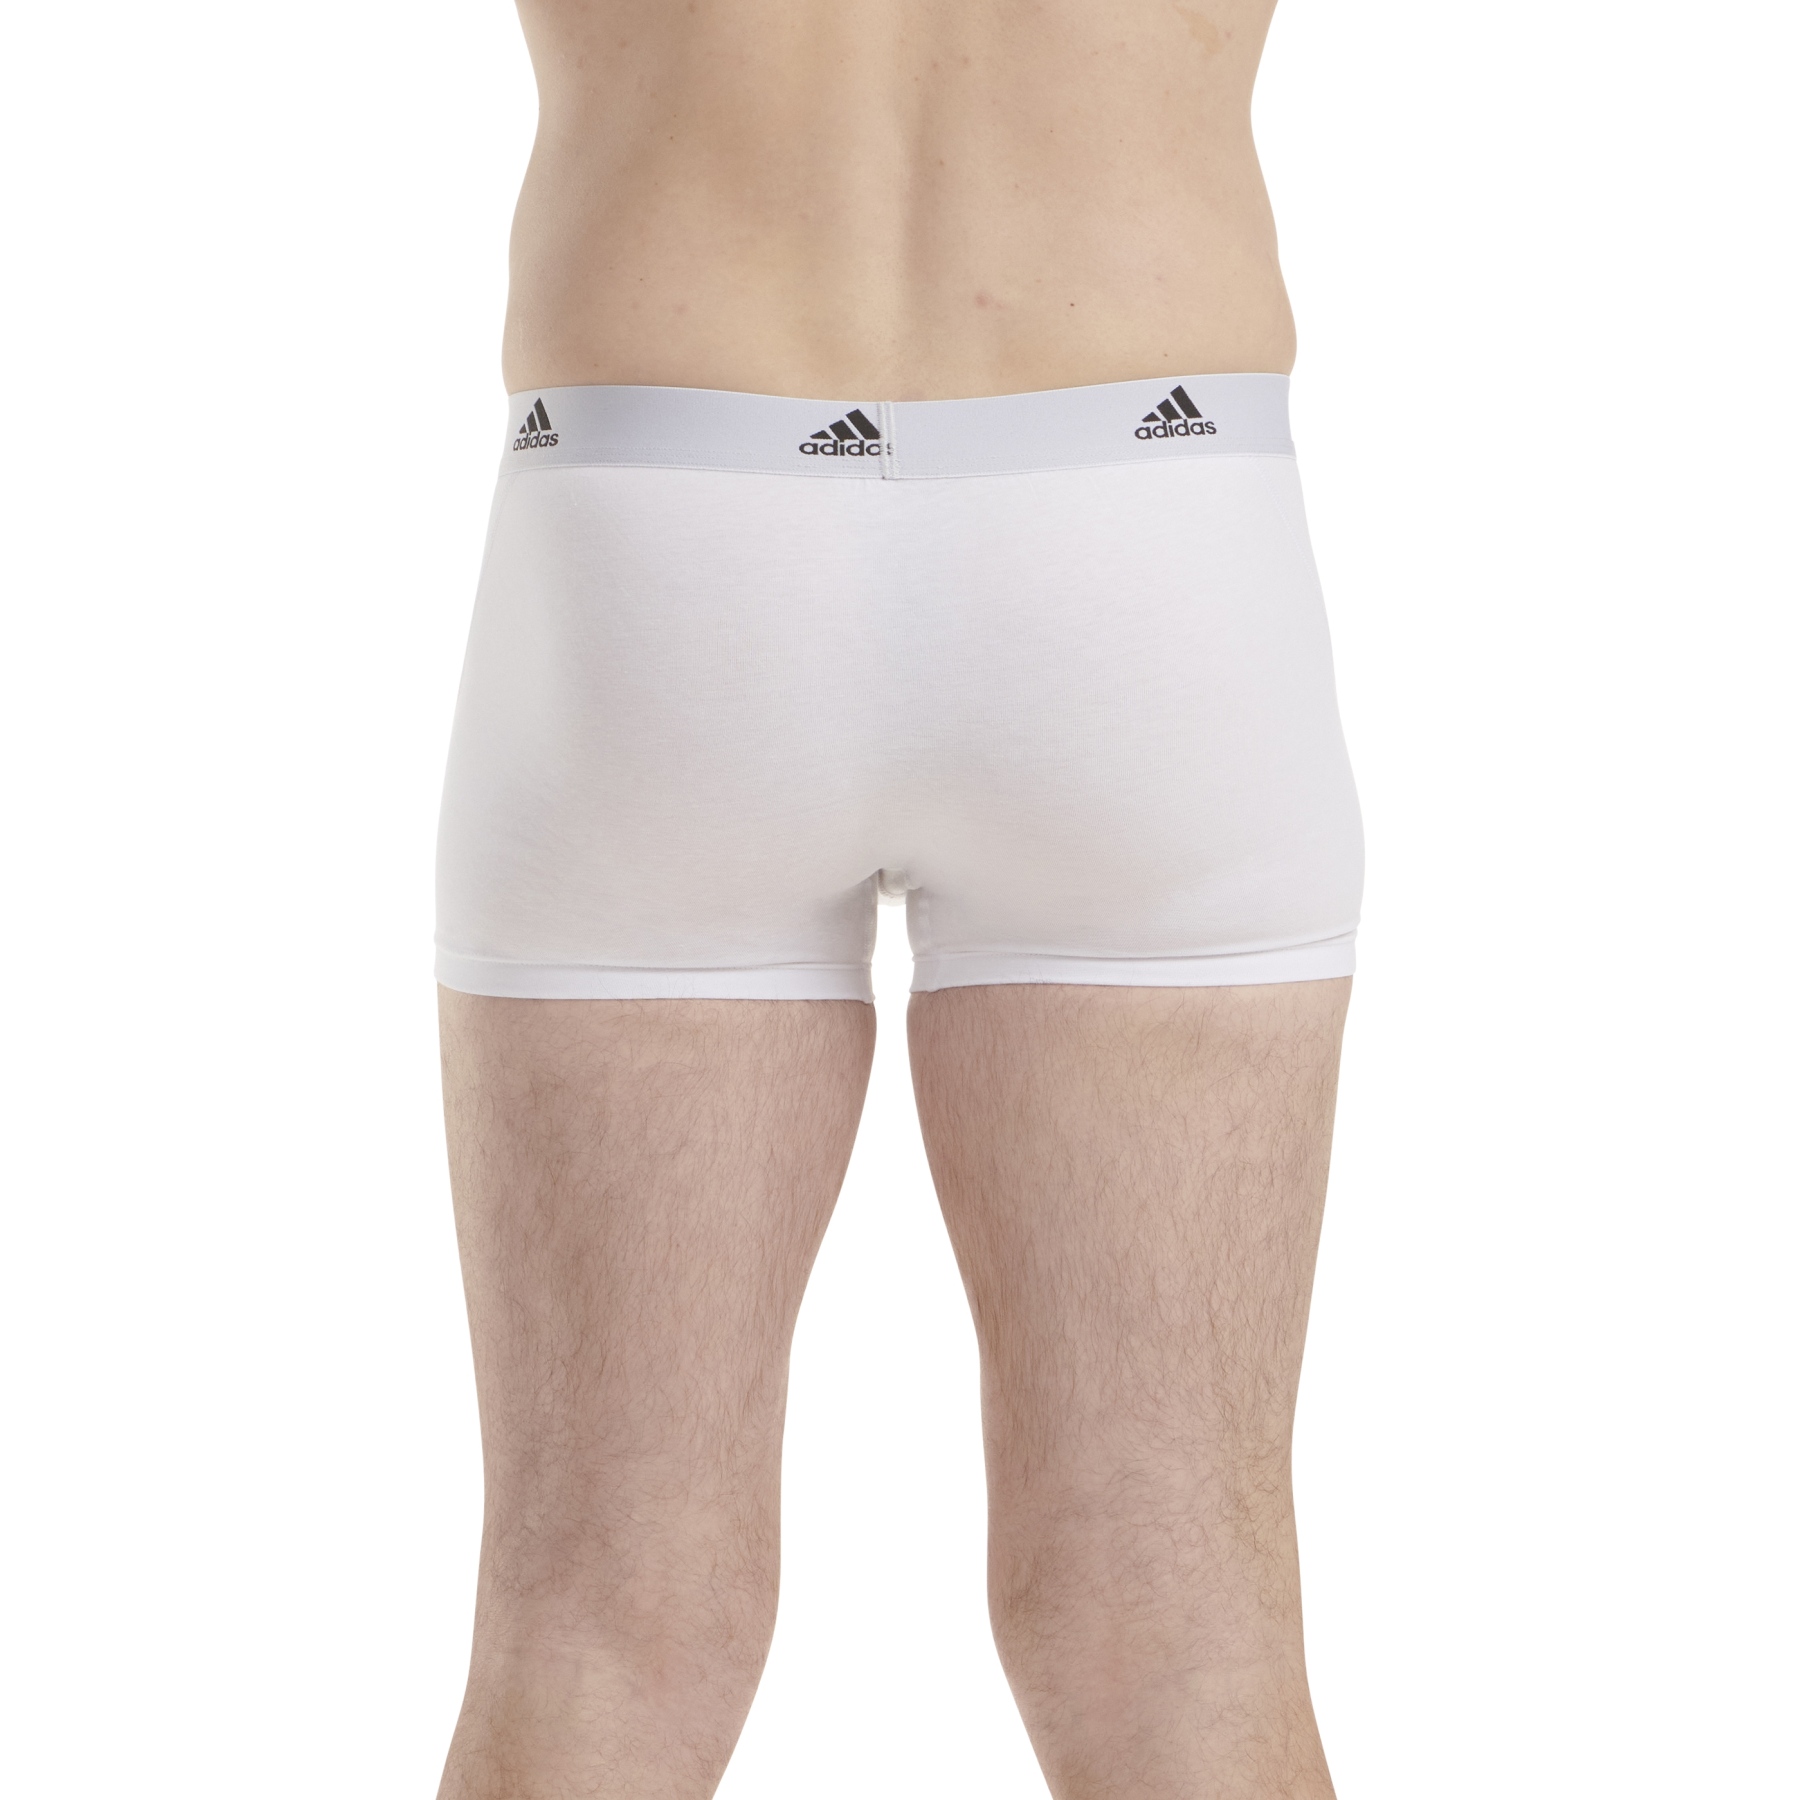 https://images.bike24.com/i/mb/dd/54/8c/adidas-sports-underwear-active-flex-cotton-trunk-3-pack-100-white-3-1453486.jpg